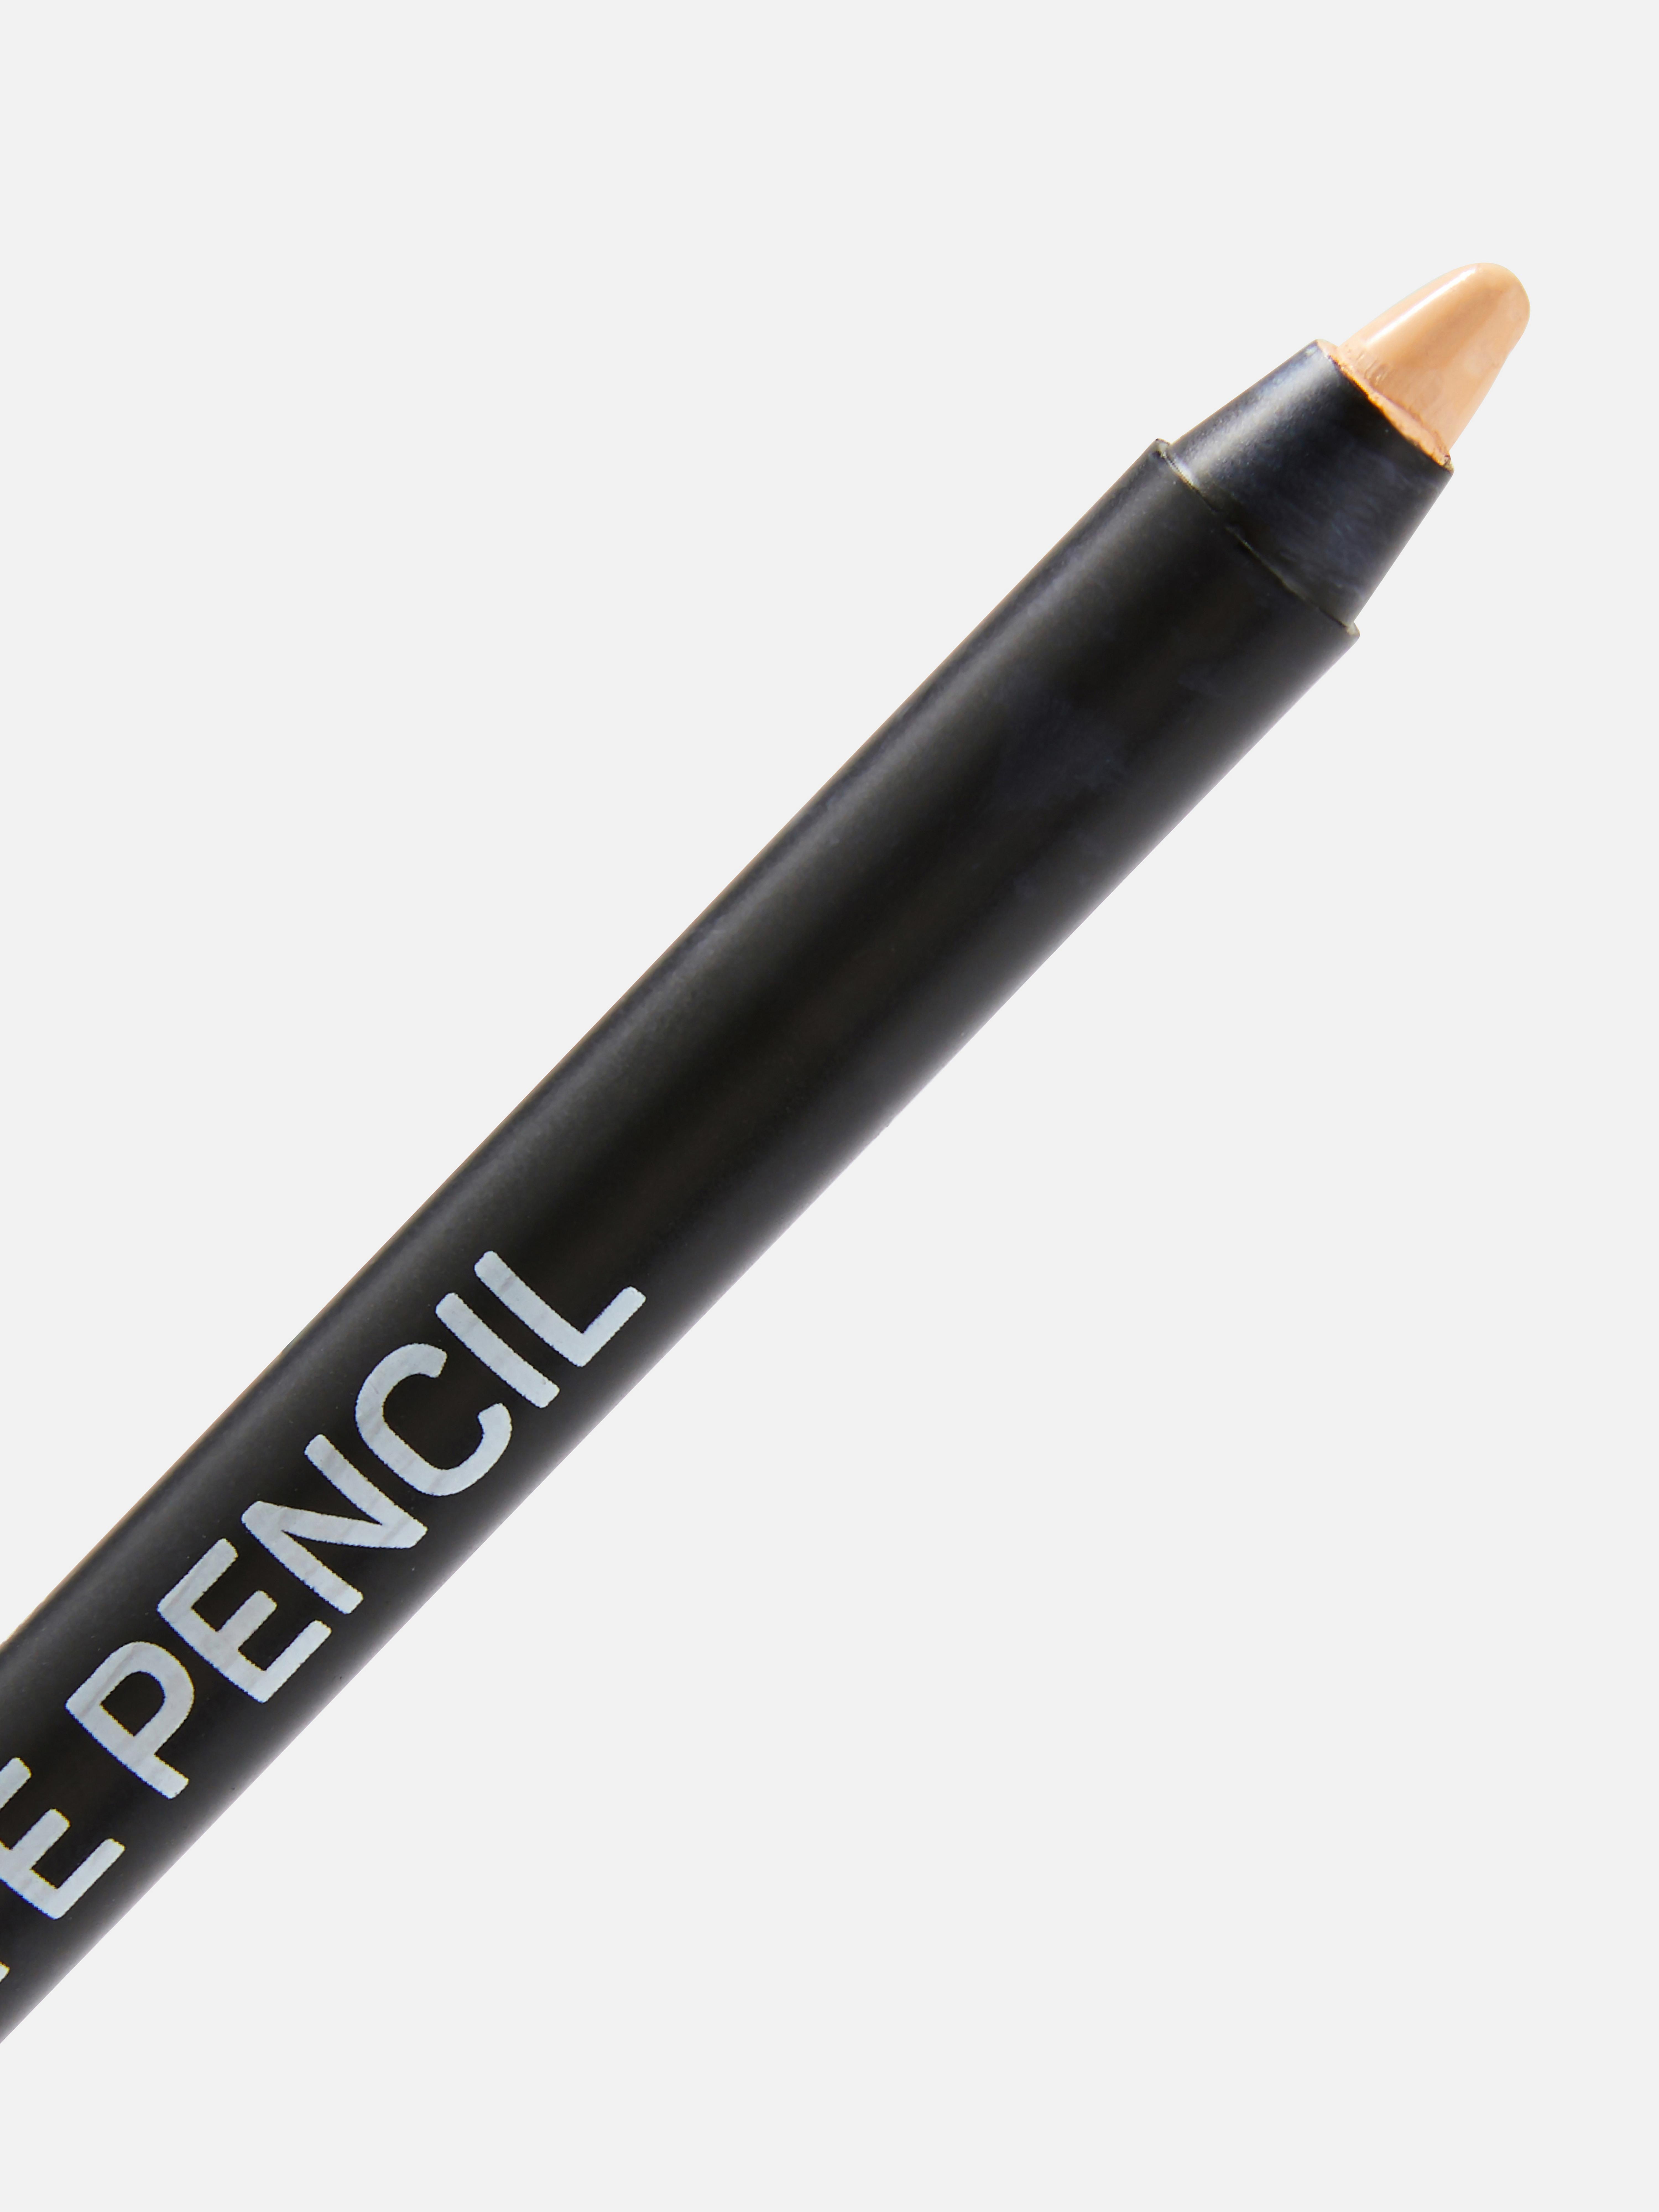 PS... Kohl Eyeliner Pencil